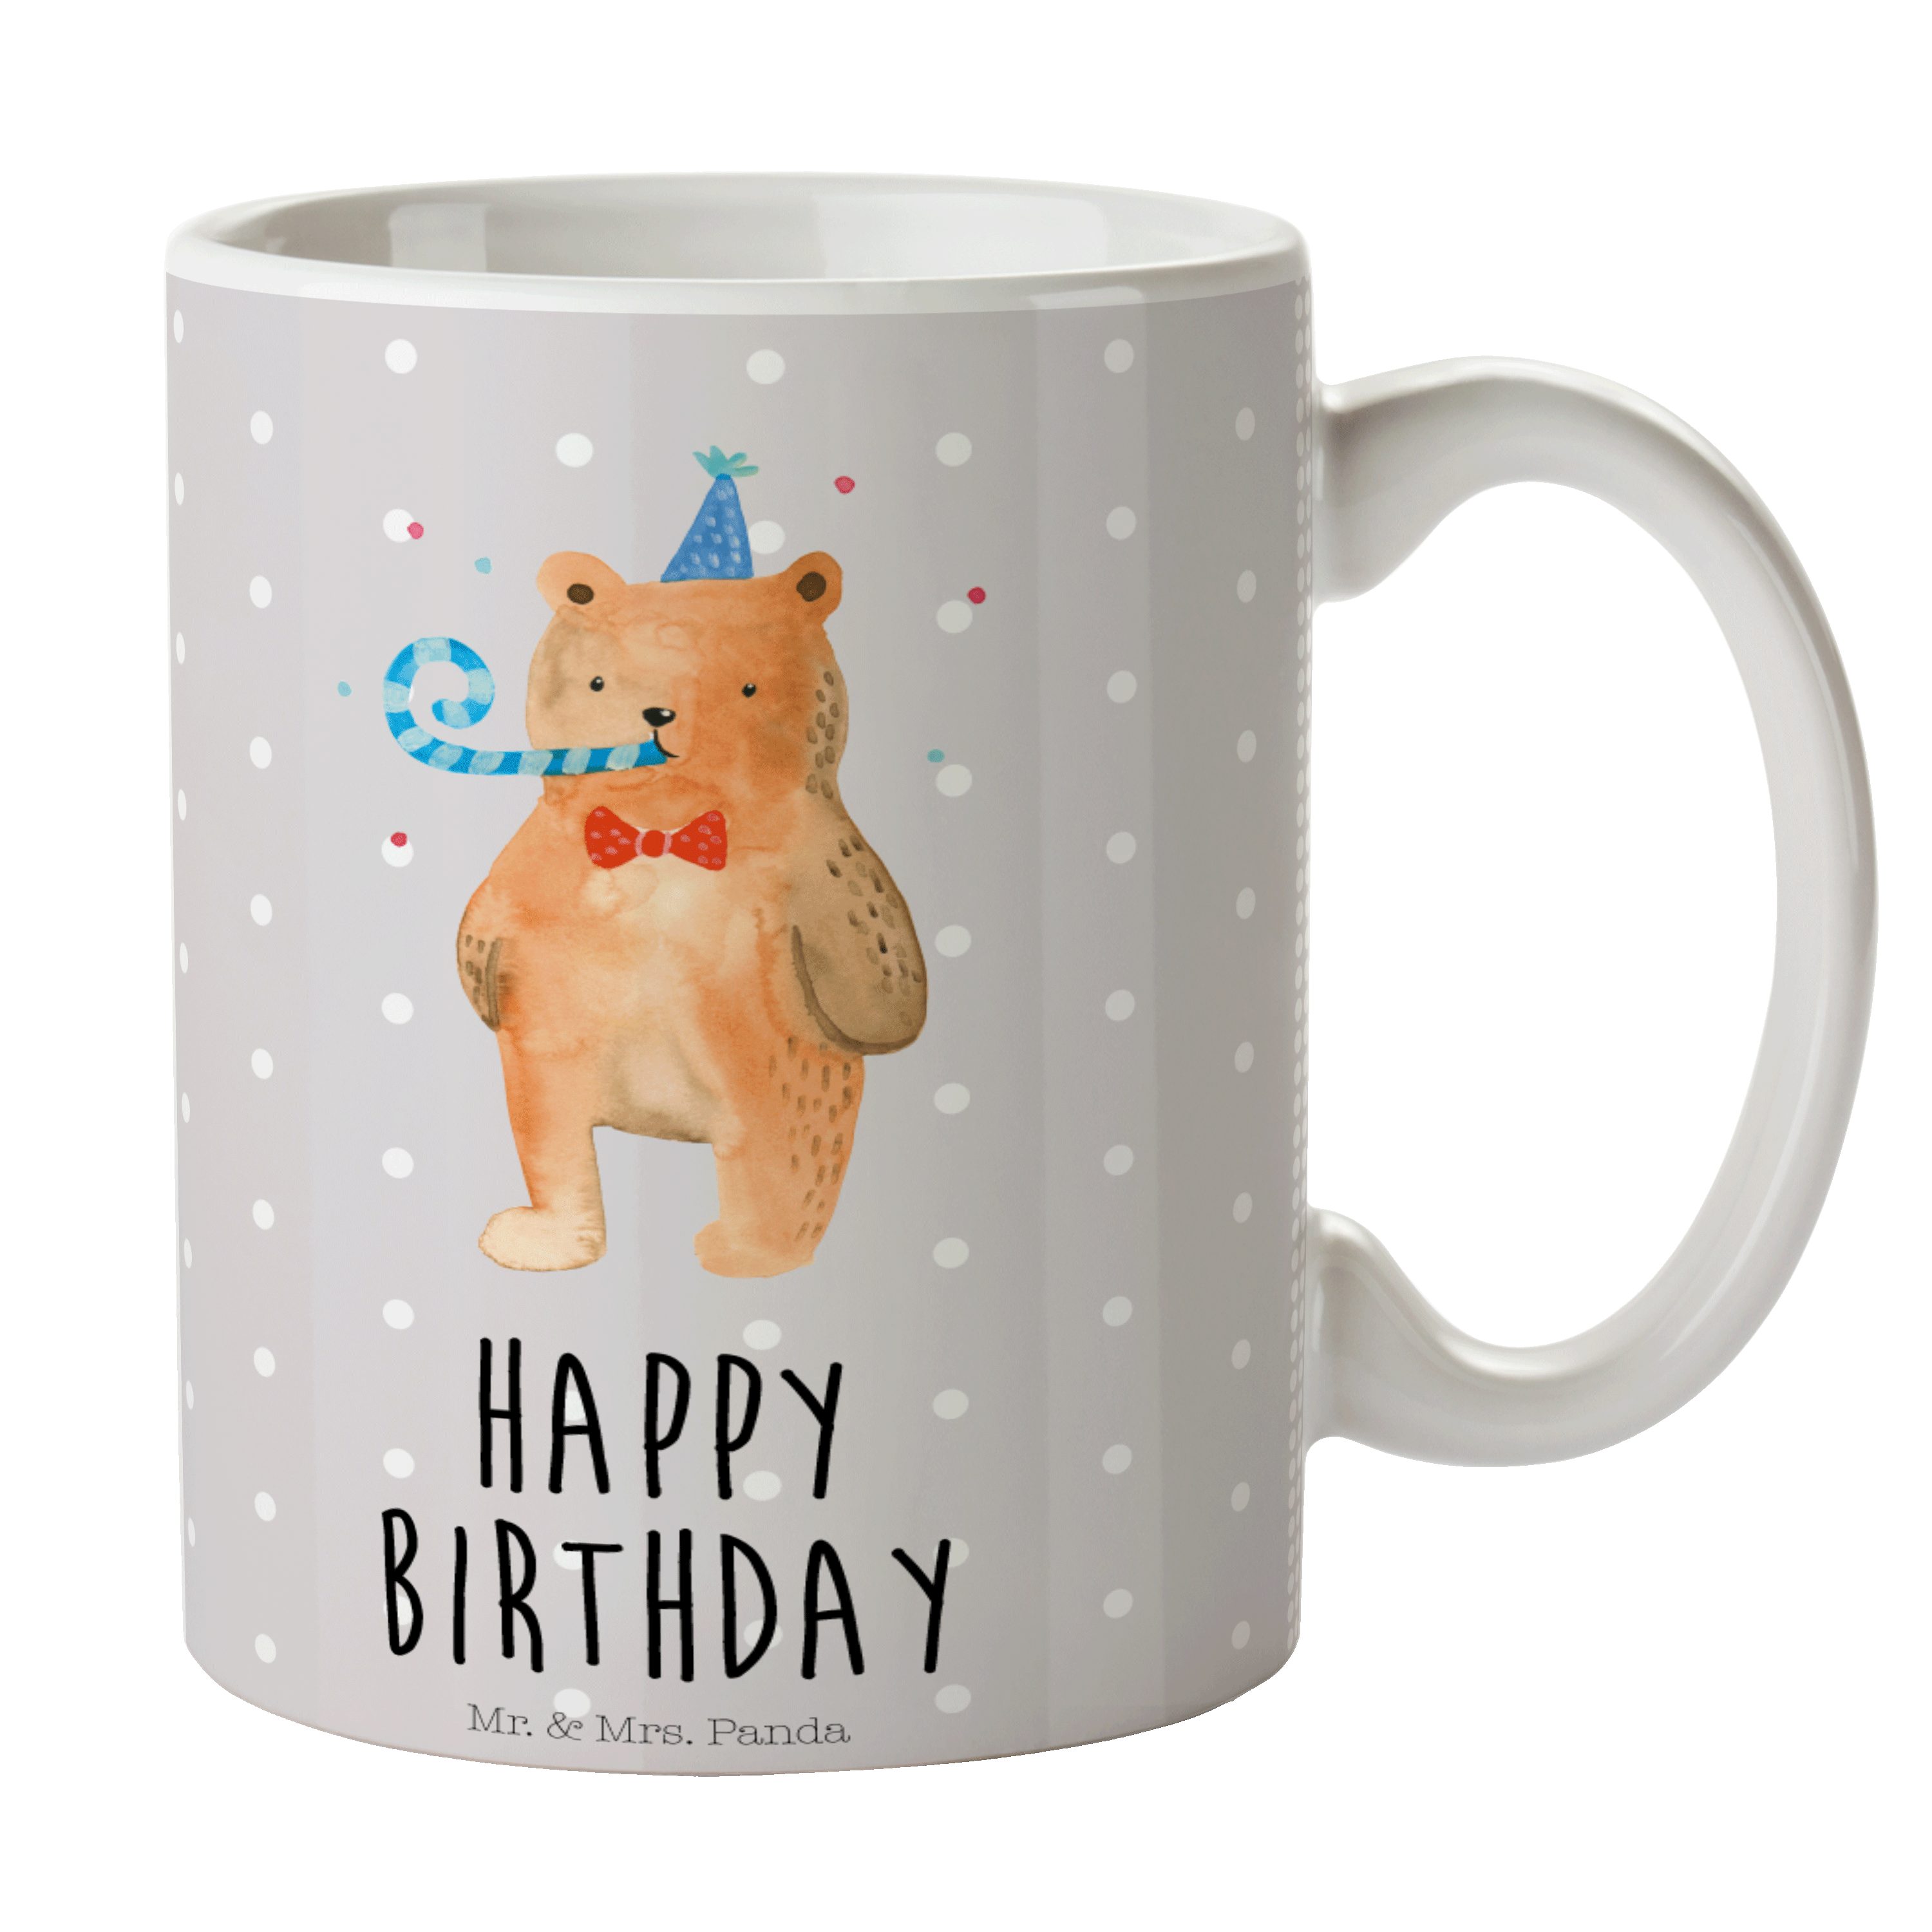 Mr. & Mrs. Panda Tasse Birthday Bär - Grau Pastell - Geschenk, Teddy, Kaffeetasse, Tasse, Bü, Keramik